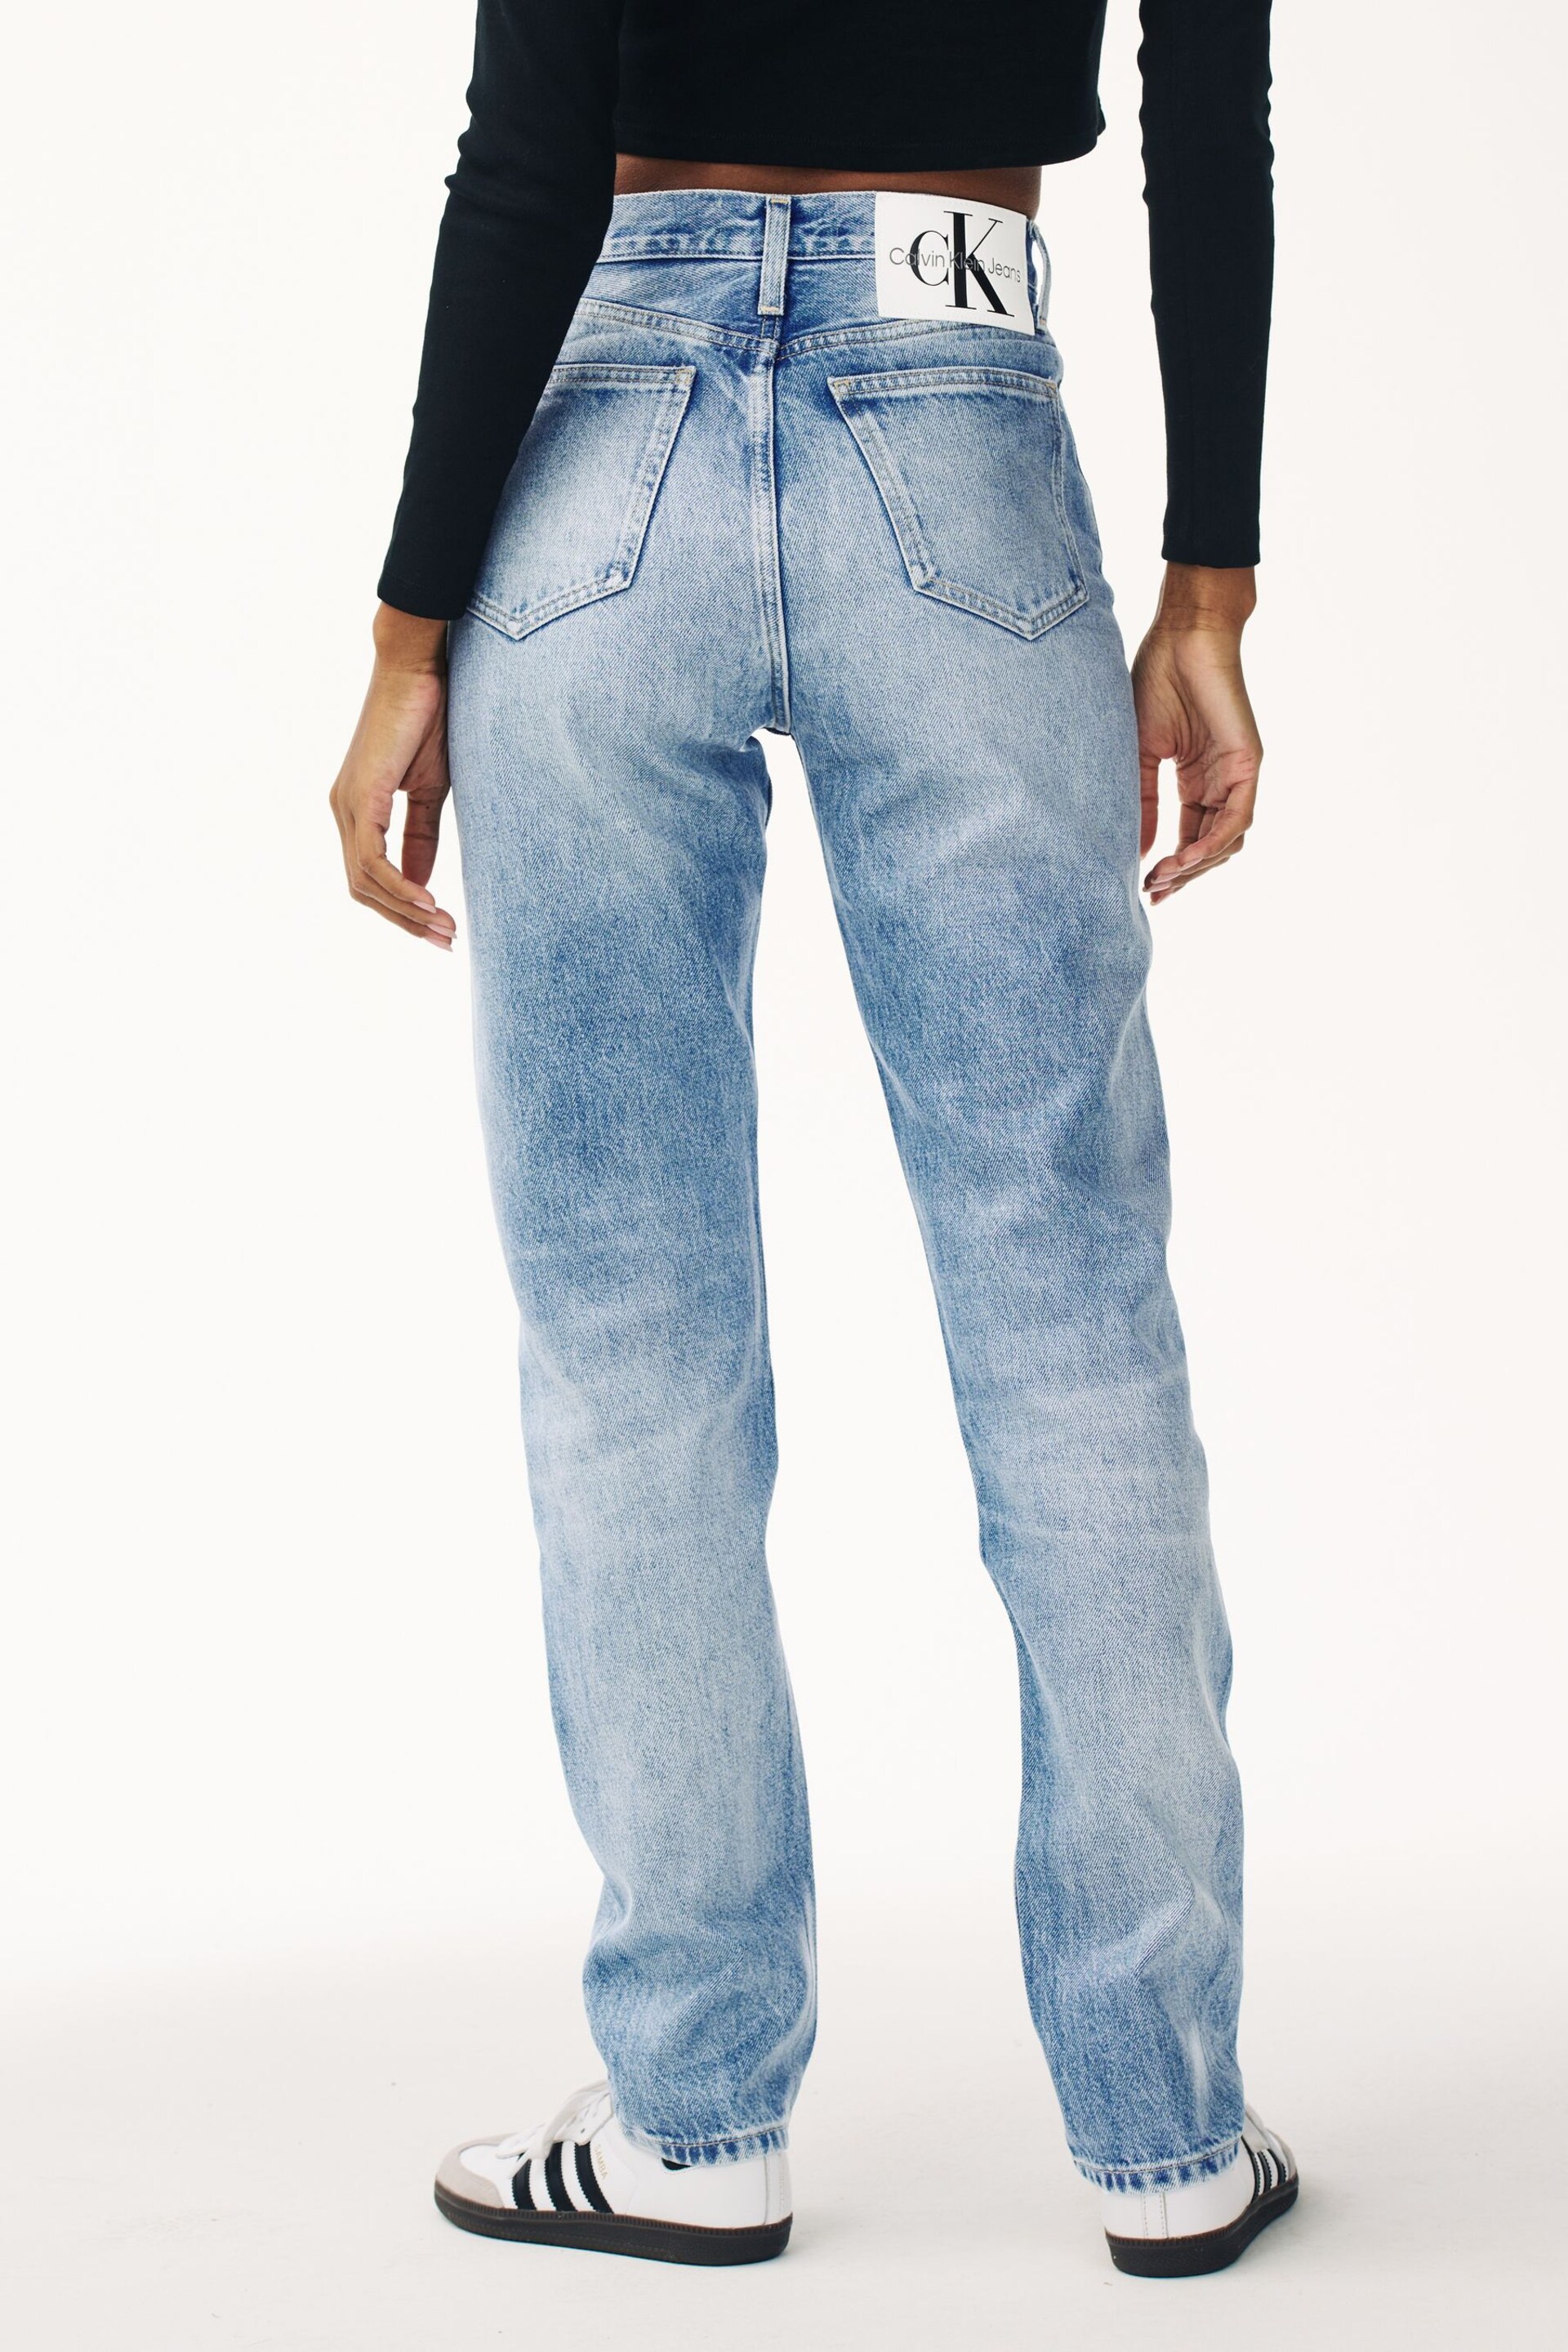 Calvin Klein Jeans Blue Authentic Slim Jeans - Image 2 of 7